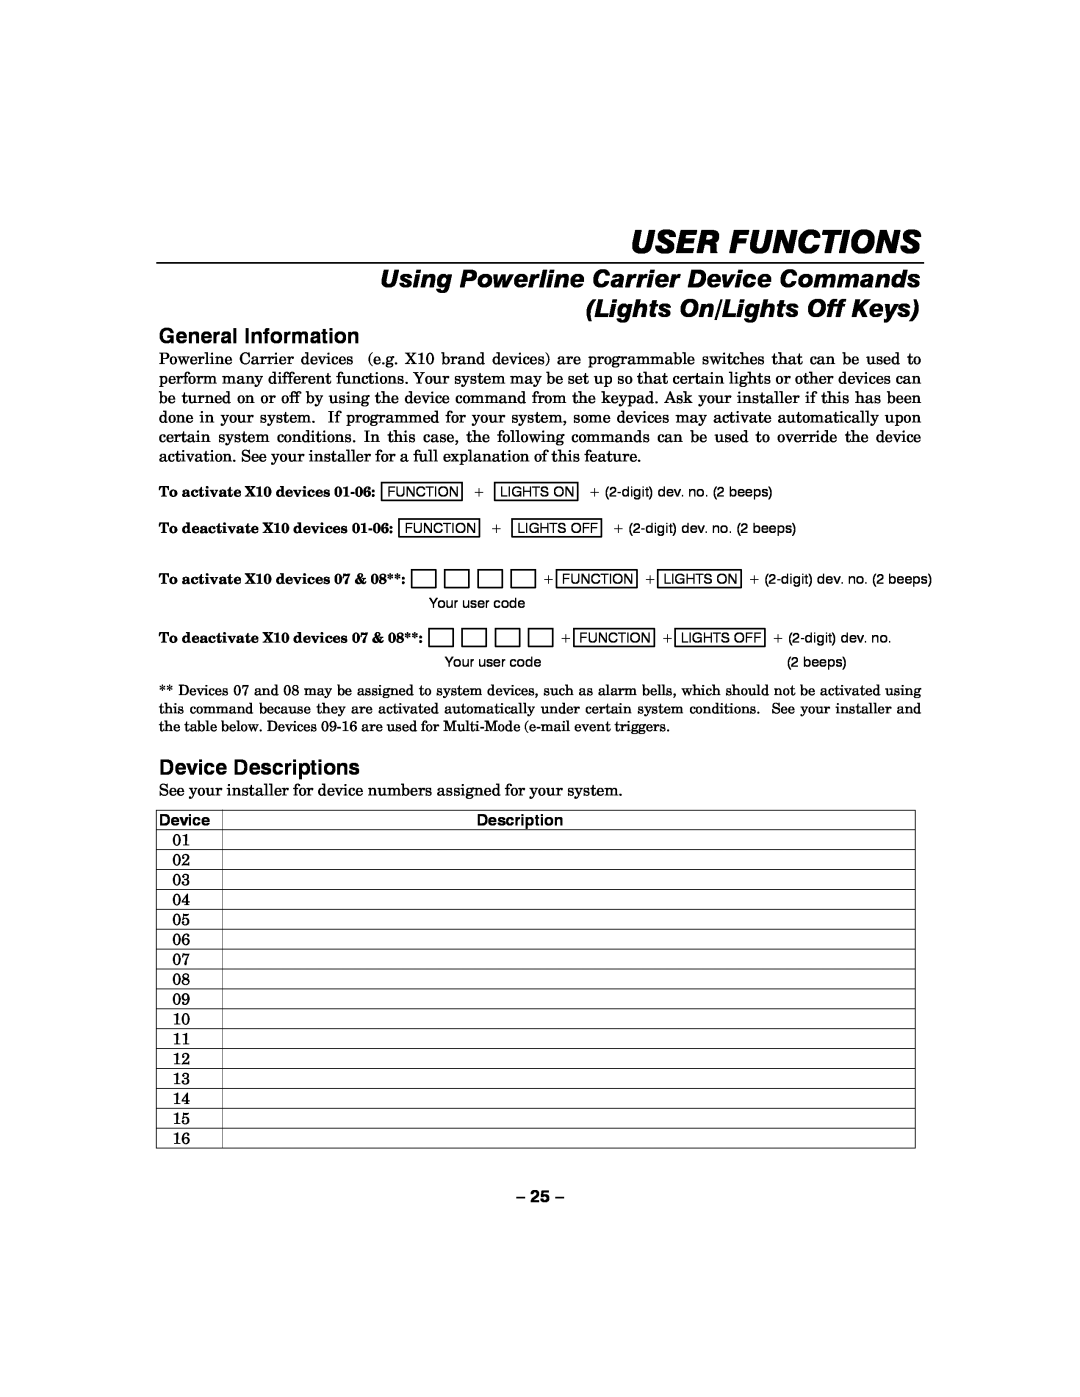 Honeywell LYNXR-2 manual Device Descriptions, User Functions, General Information 